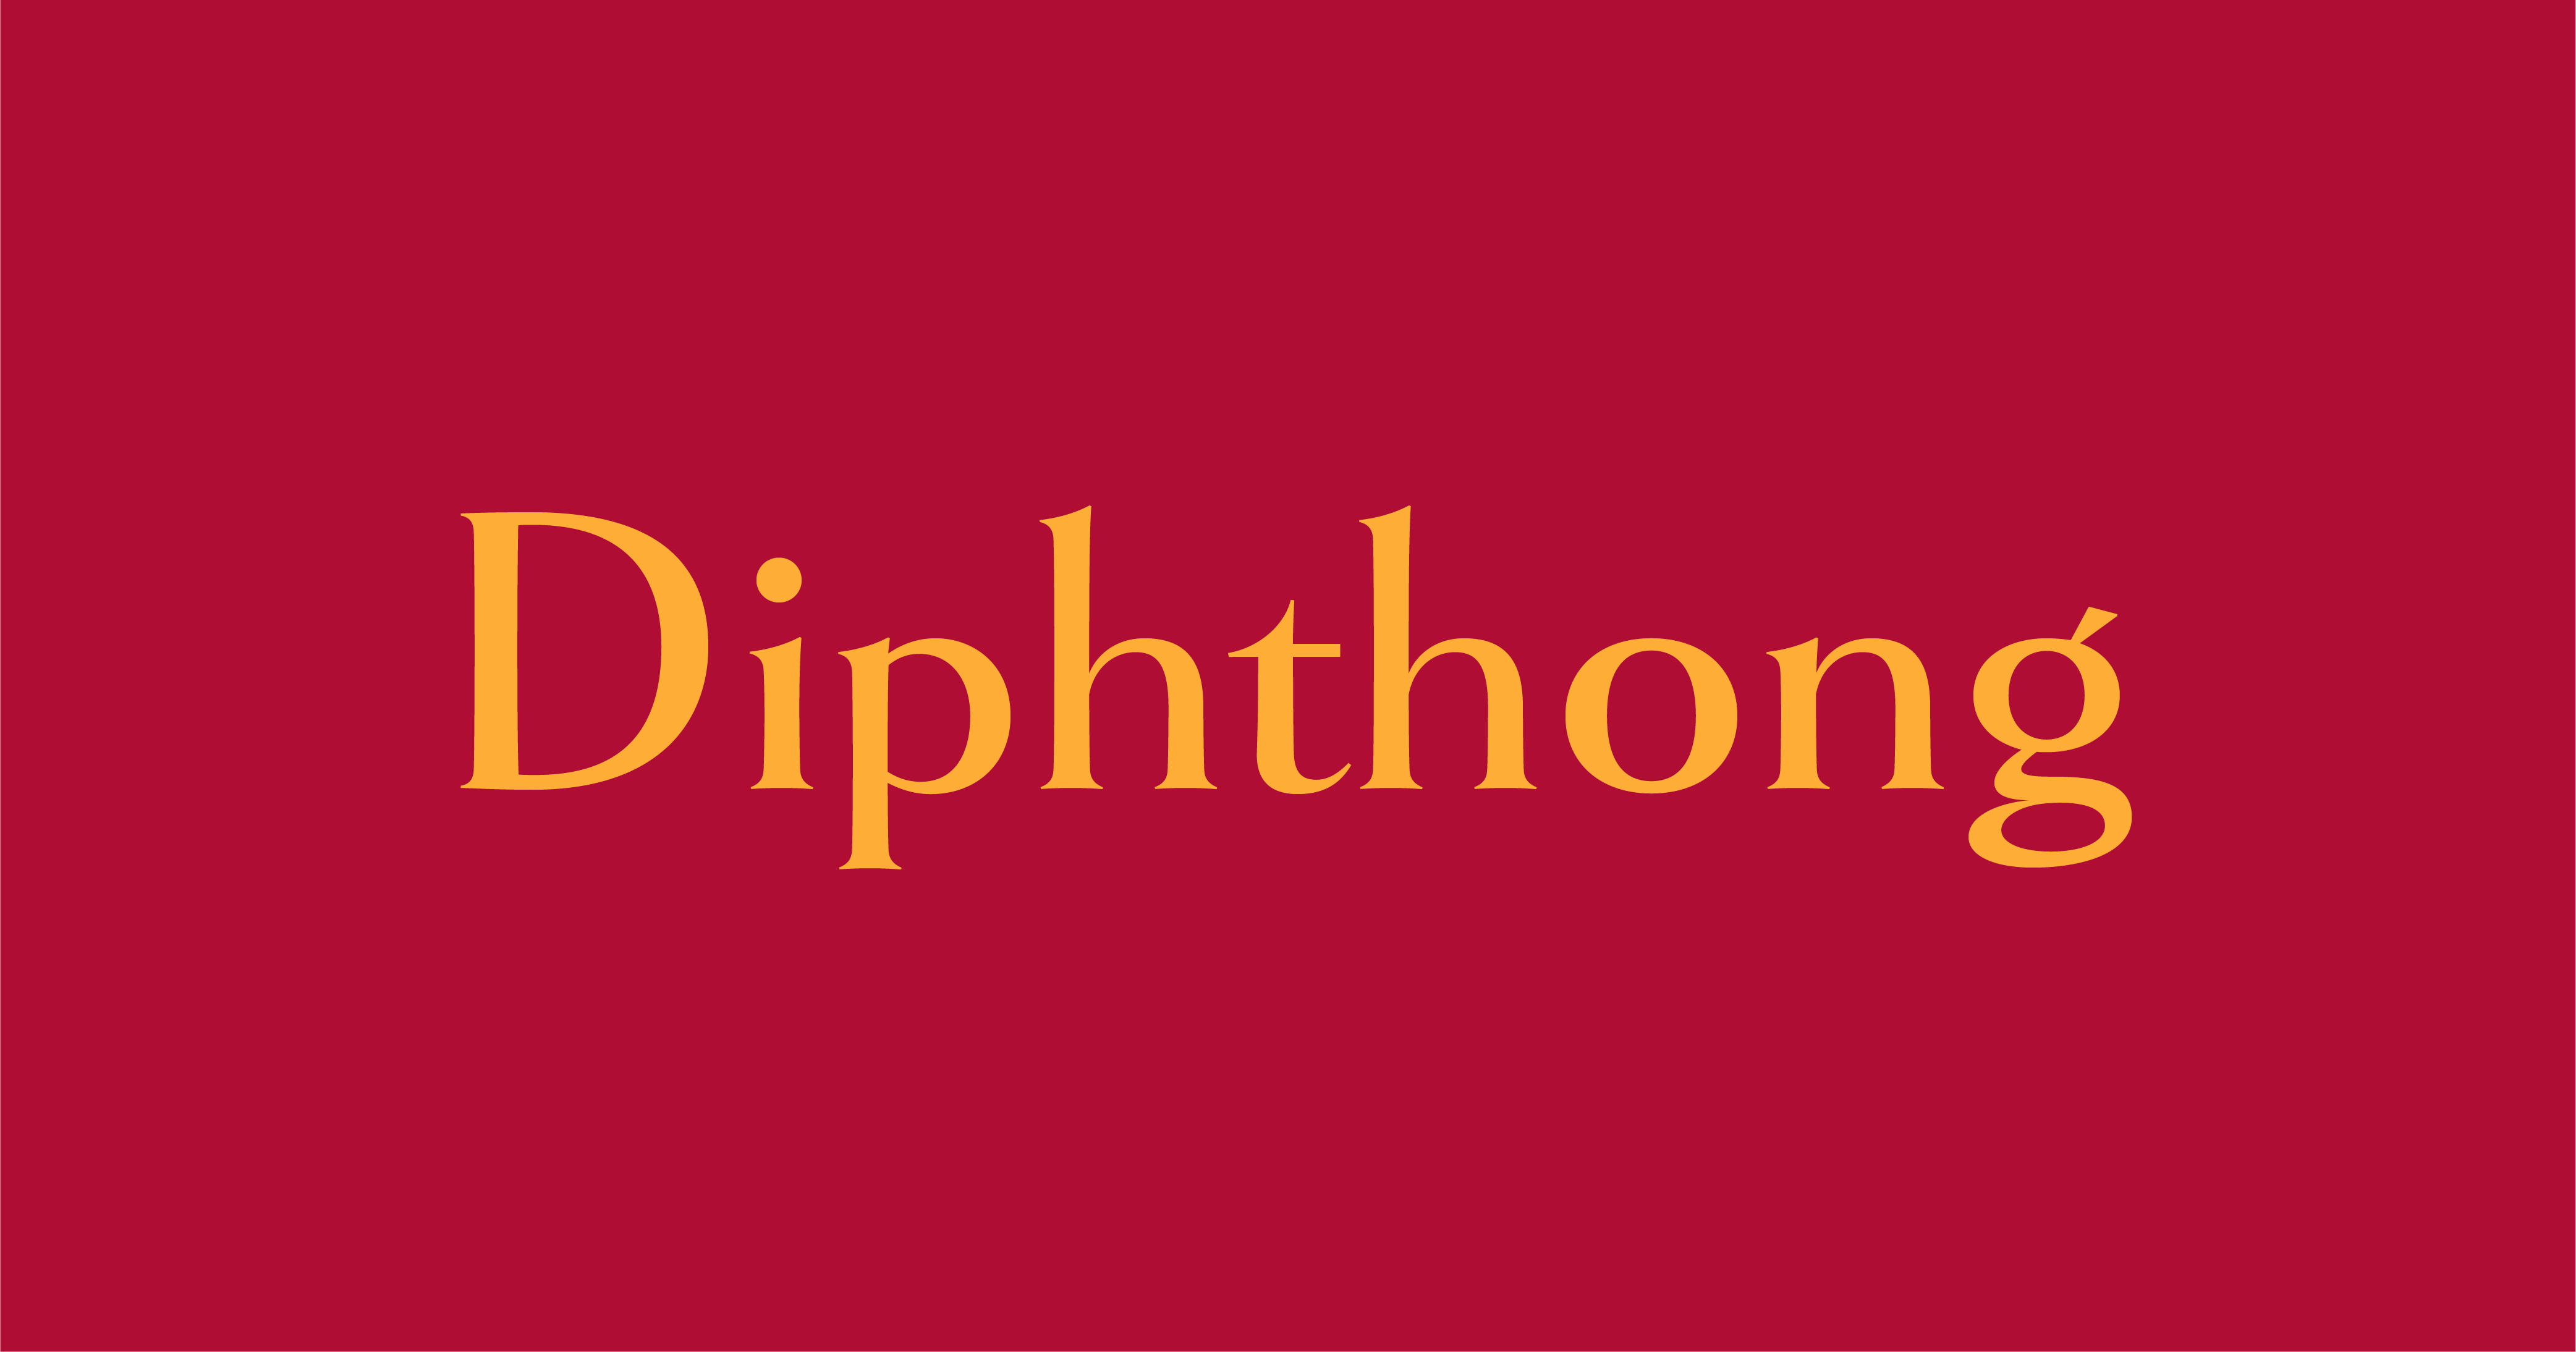 Diphthong - Word Daily